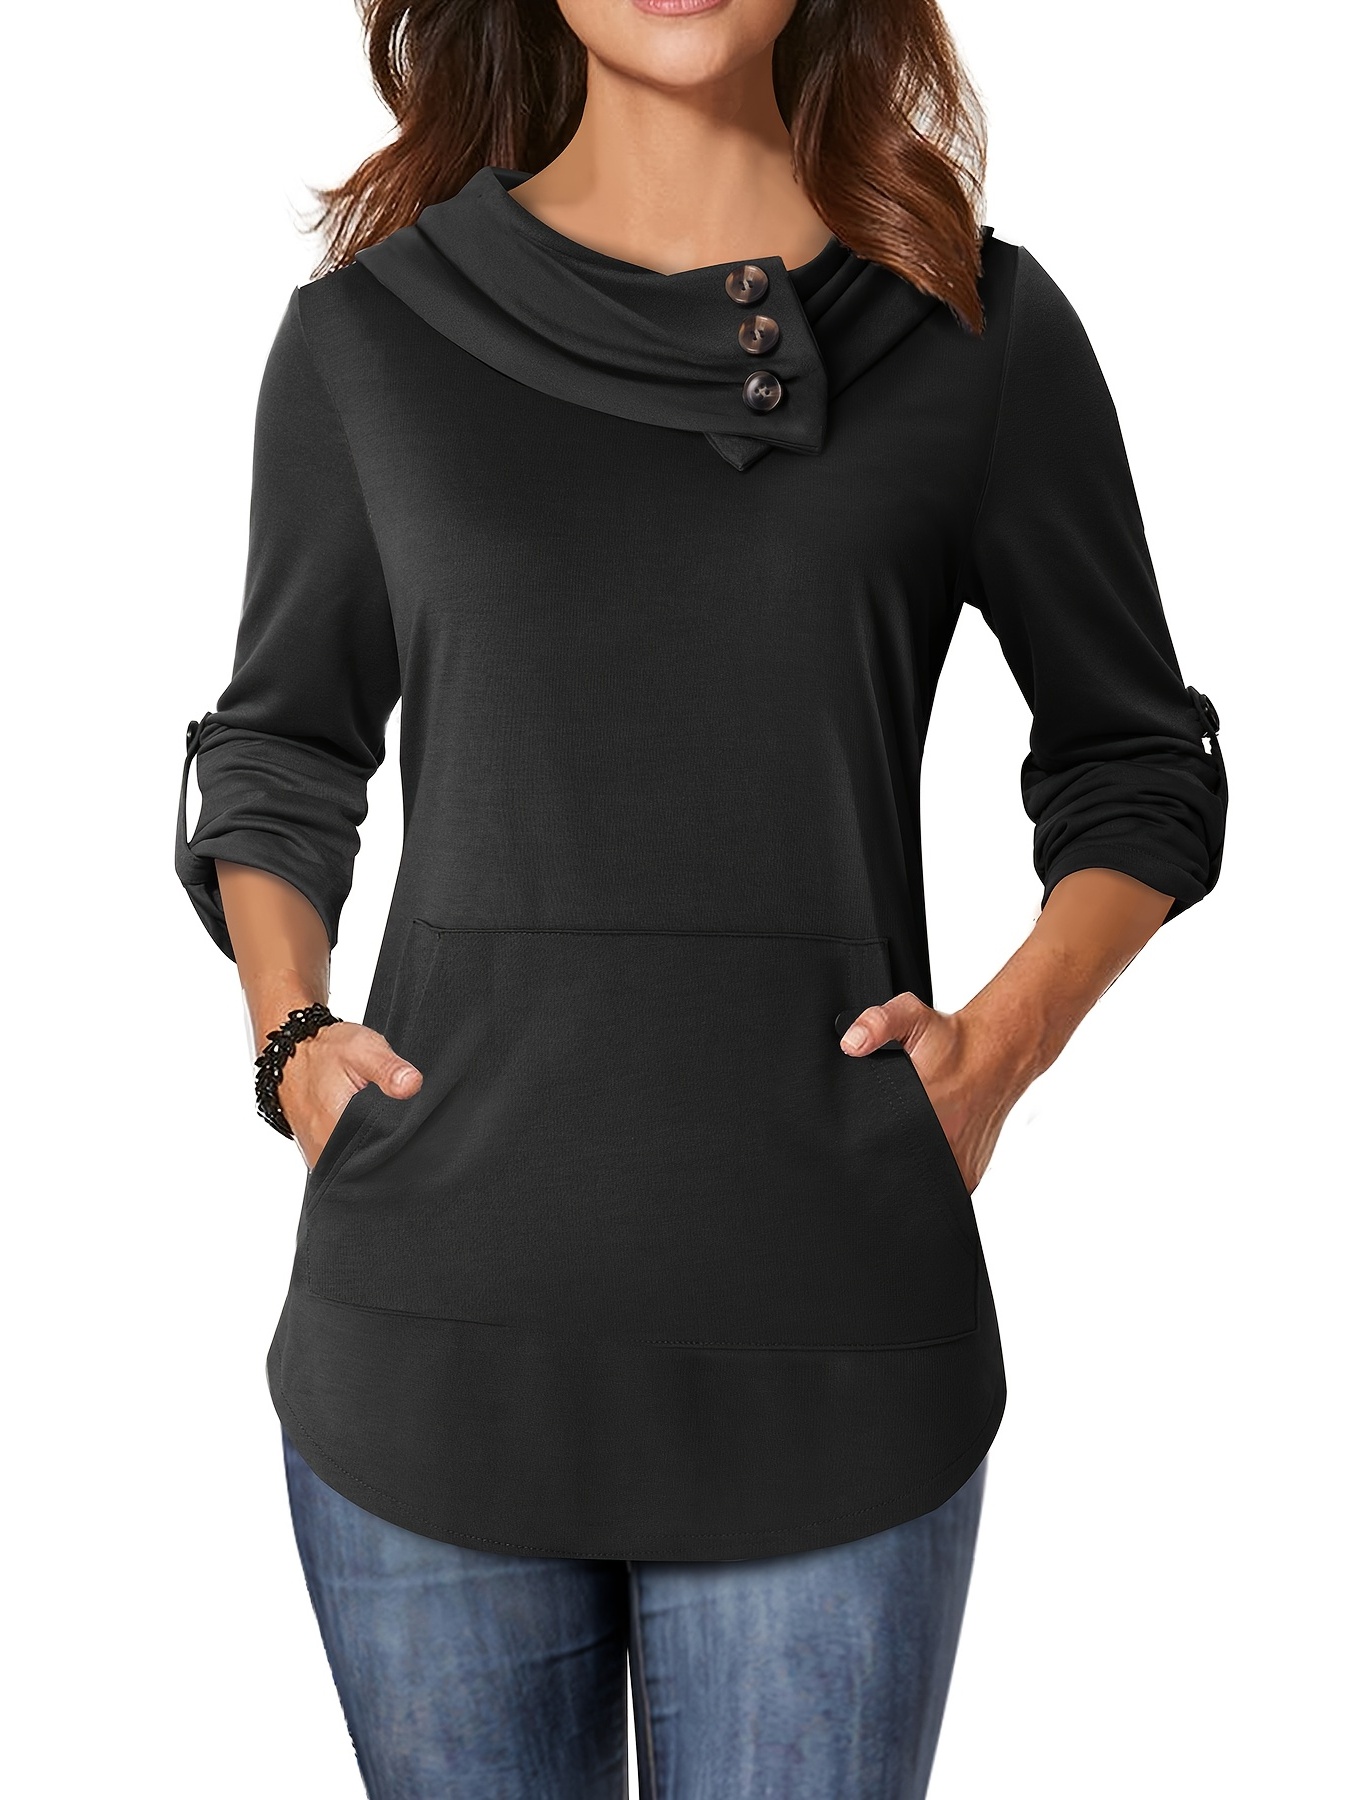 Stylish Fall Fashion: Grey Bell Sleeve Shirt and Black Velvet Leggings